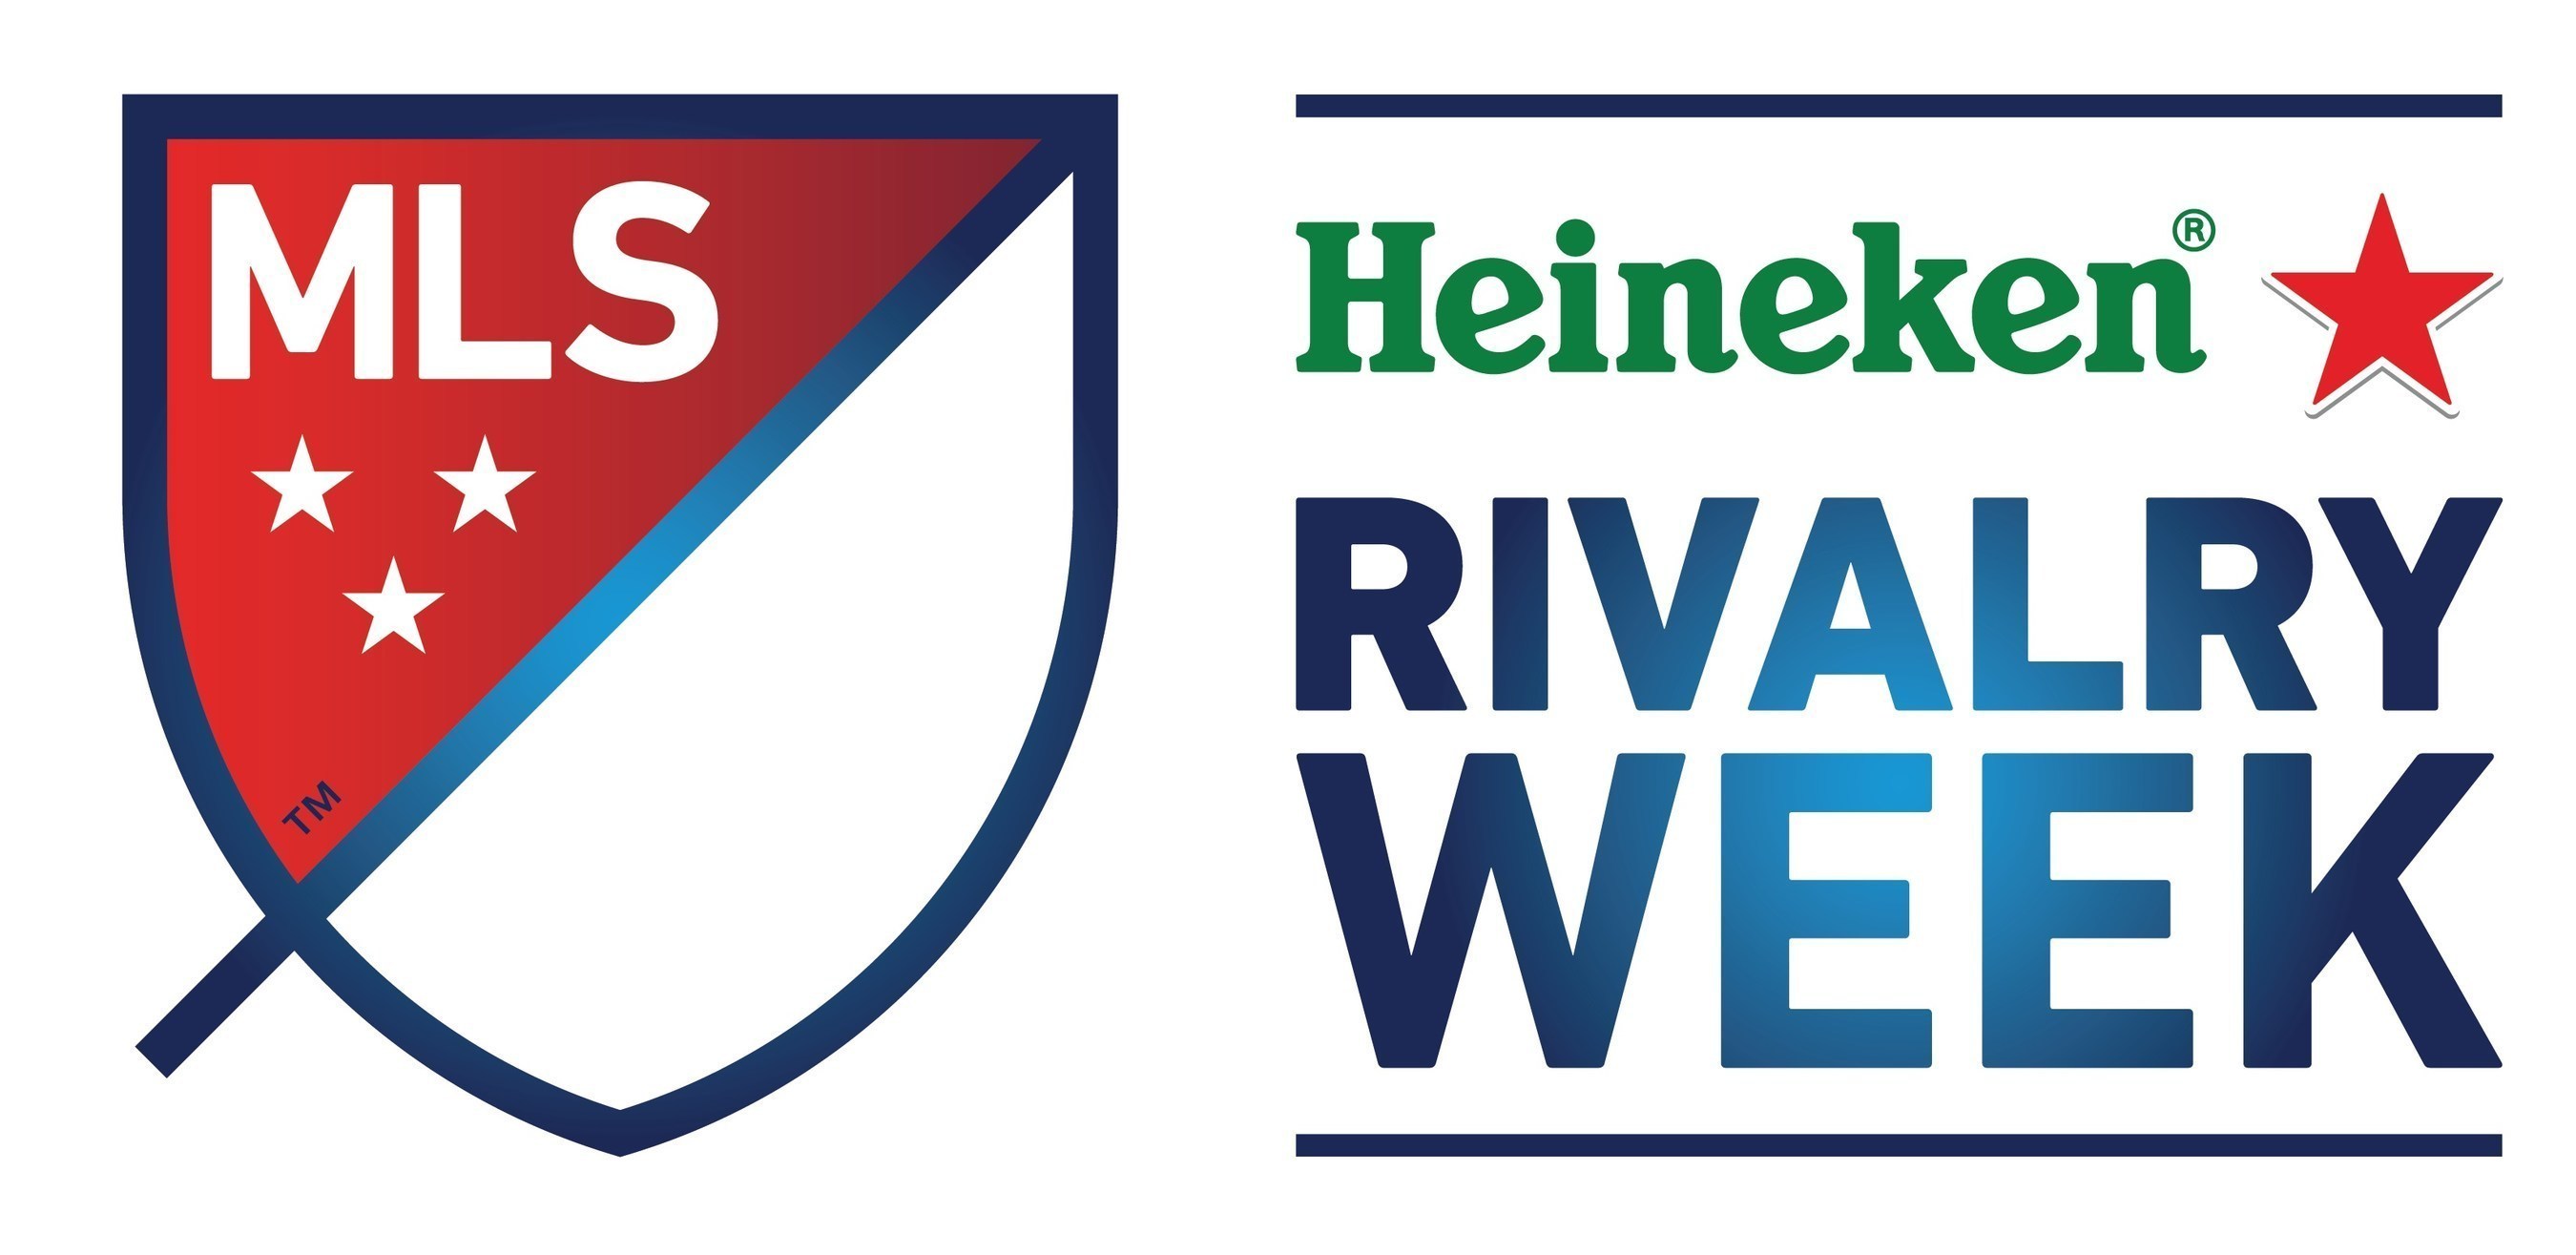 MLS Heineken Rivalry Week: June 24-28